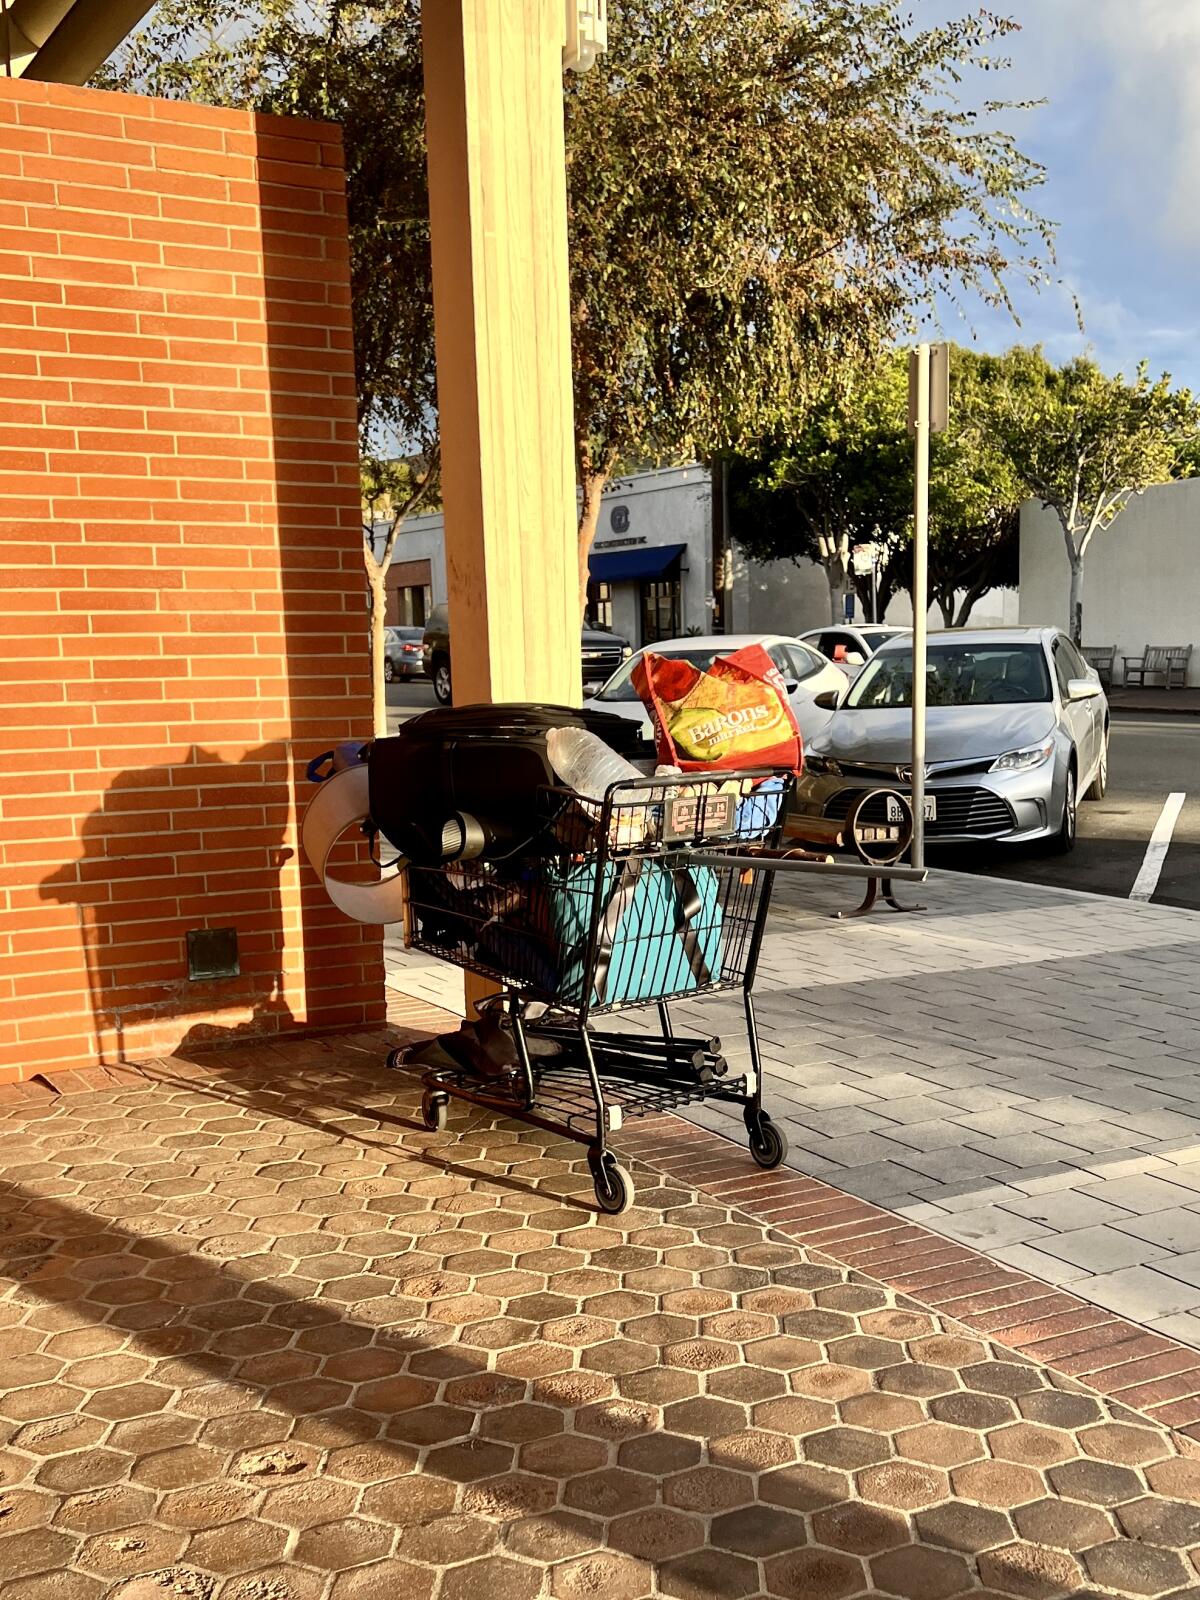 A homeless person's belongings fill a shopping cart in La Jolla's Village.